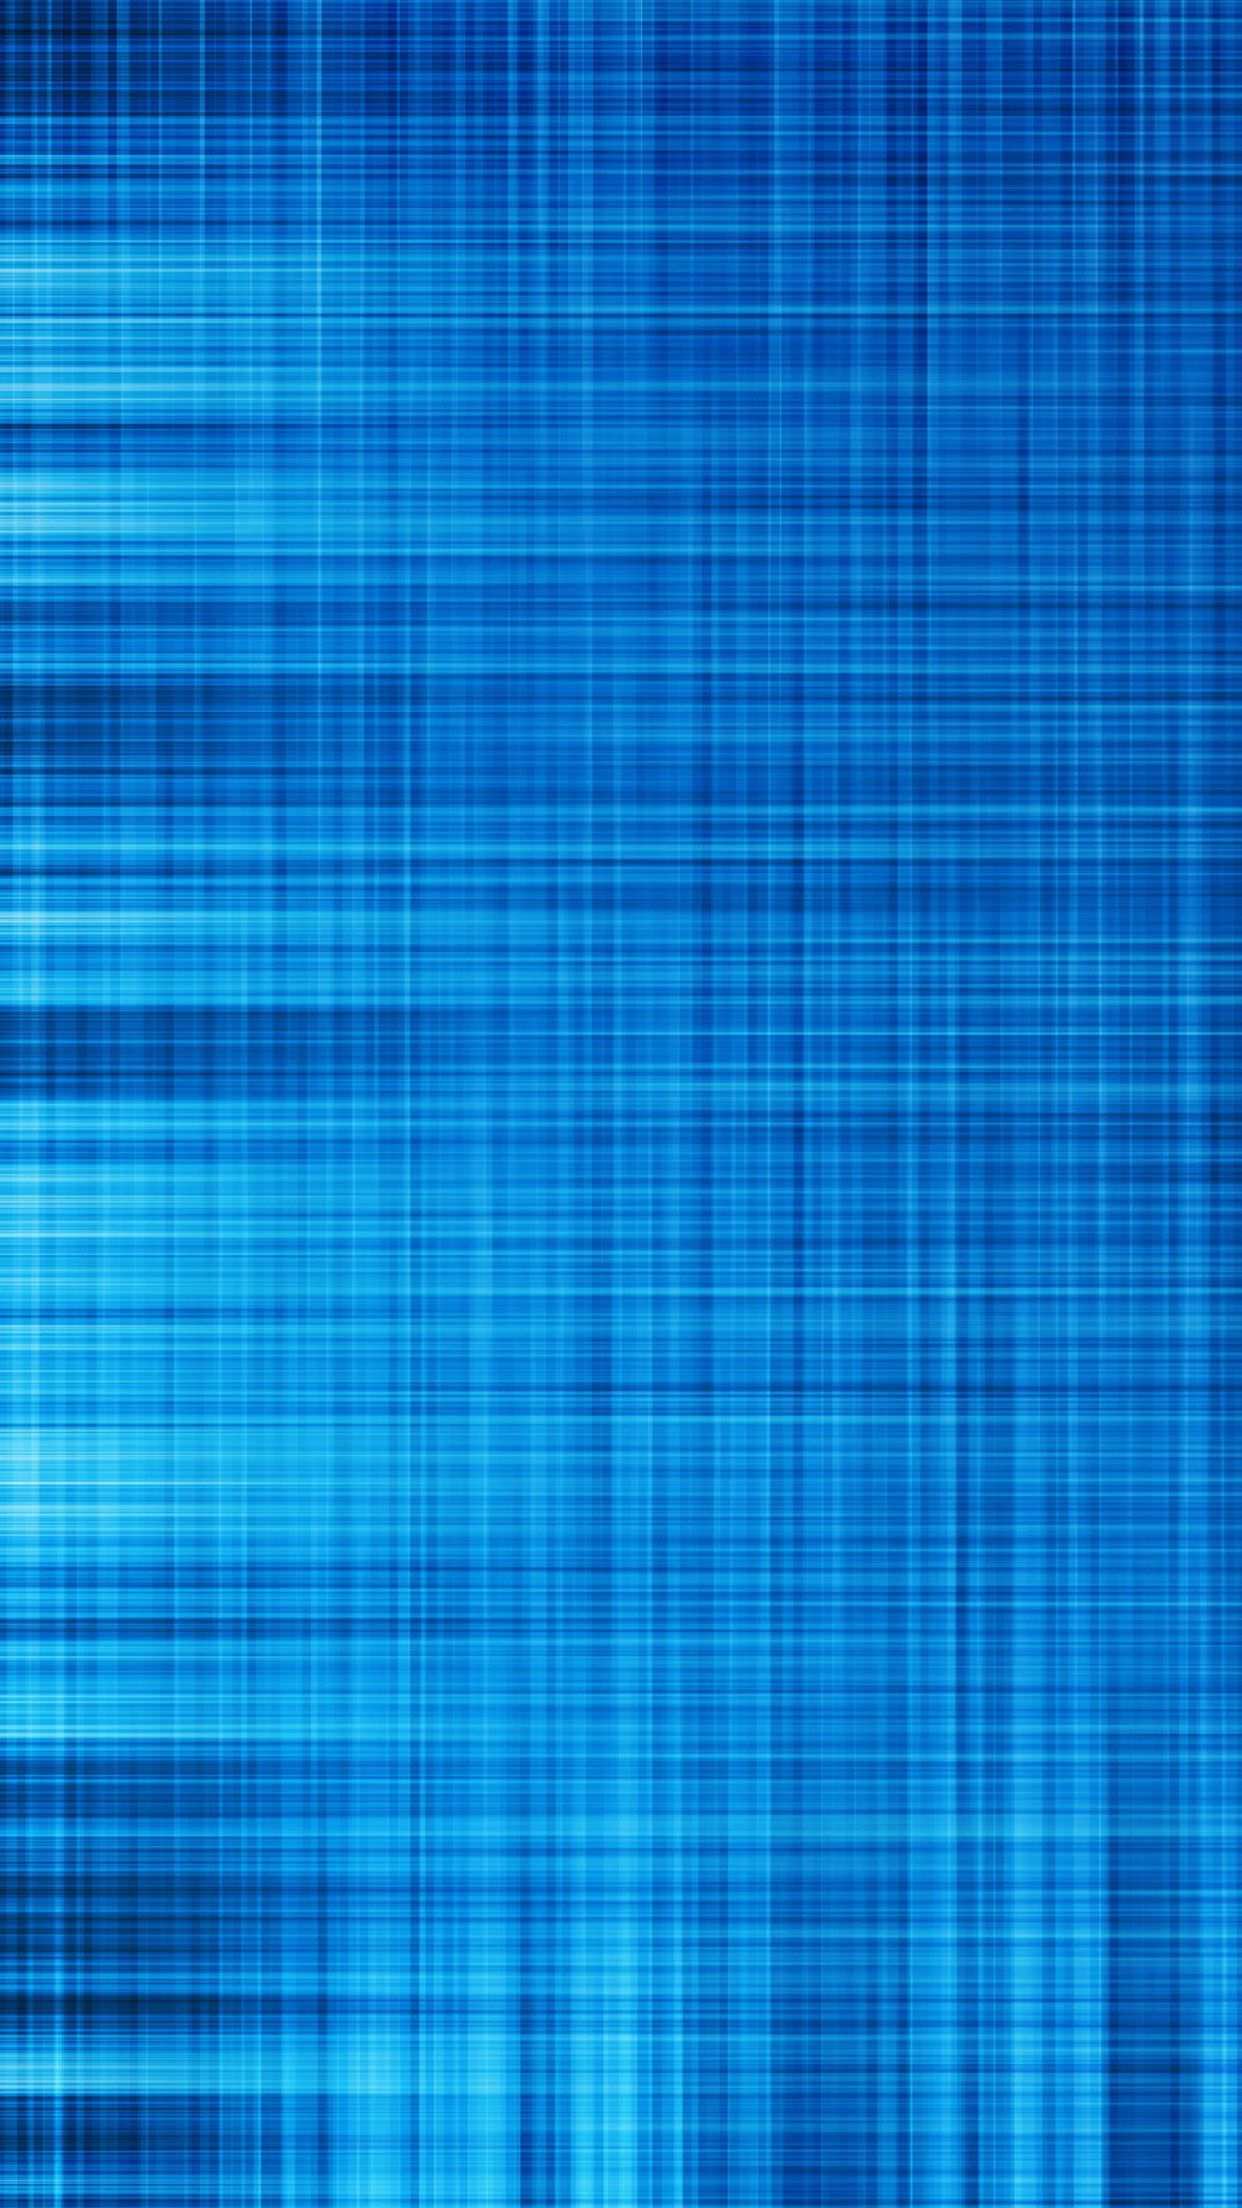 Blue Abstract Lines Wallpaper For Iphone Android Abstract Wallpaper More On Wallzapp Com Hintergrund Design Hintergrundbilder Hintergrund